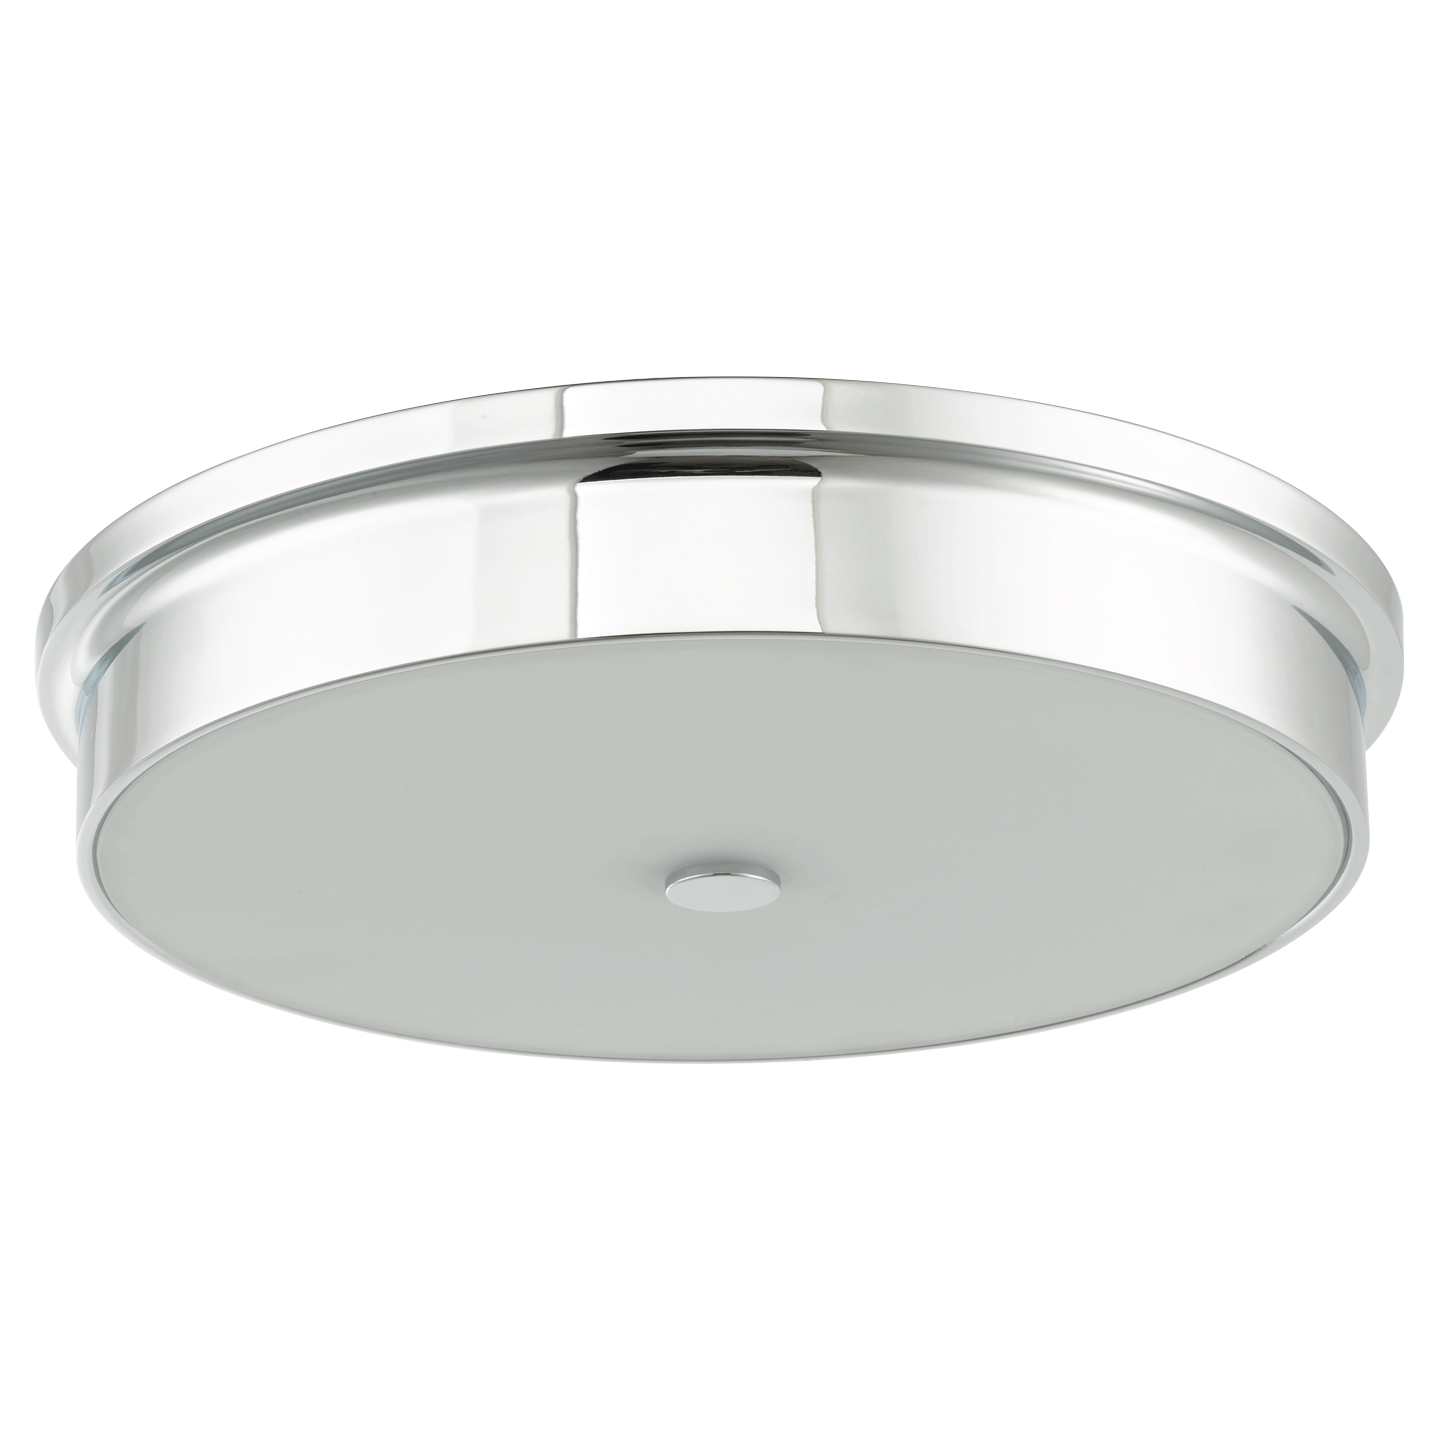 Abra Lighting Spark 15 Ceiling Light Fixture